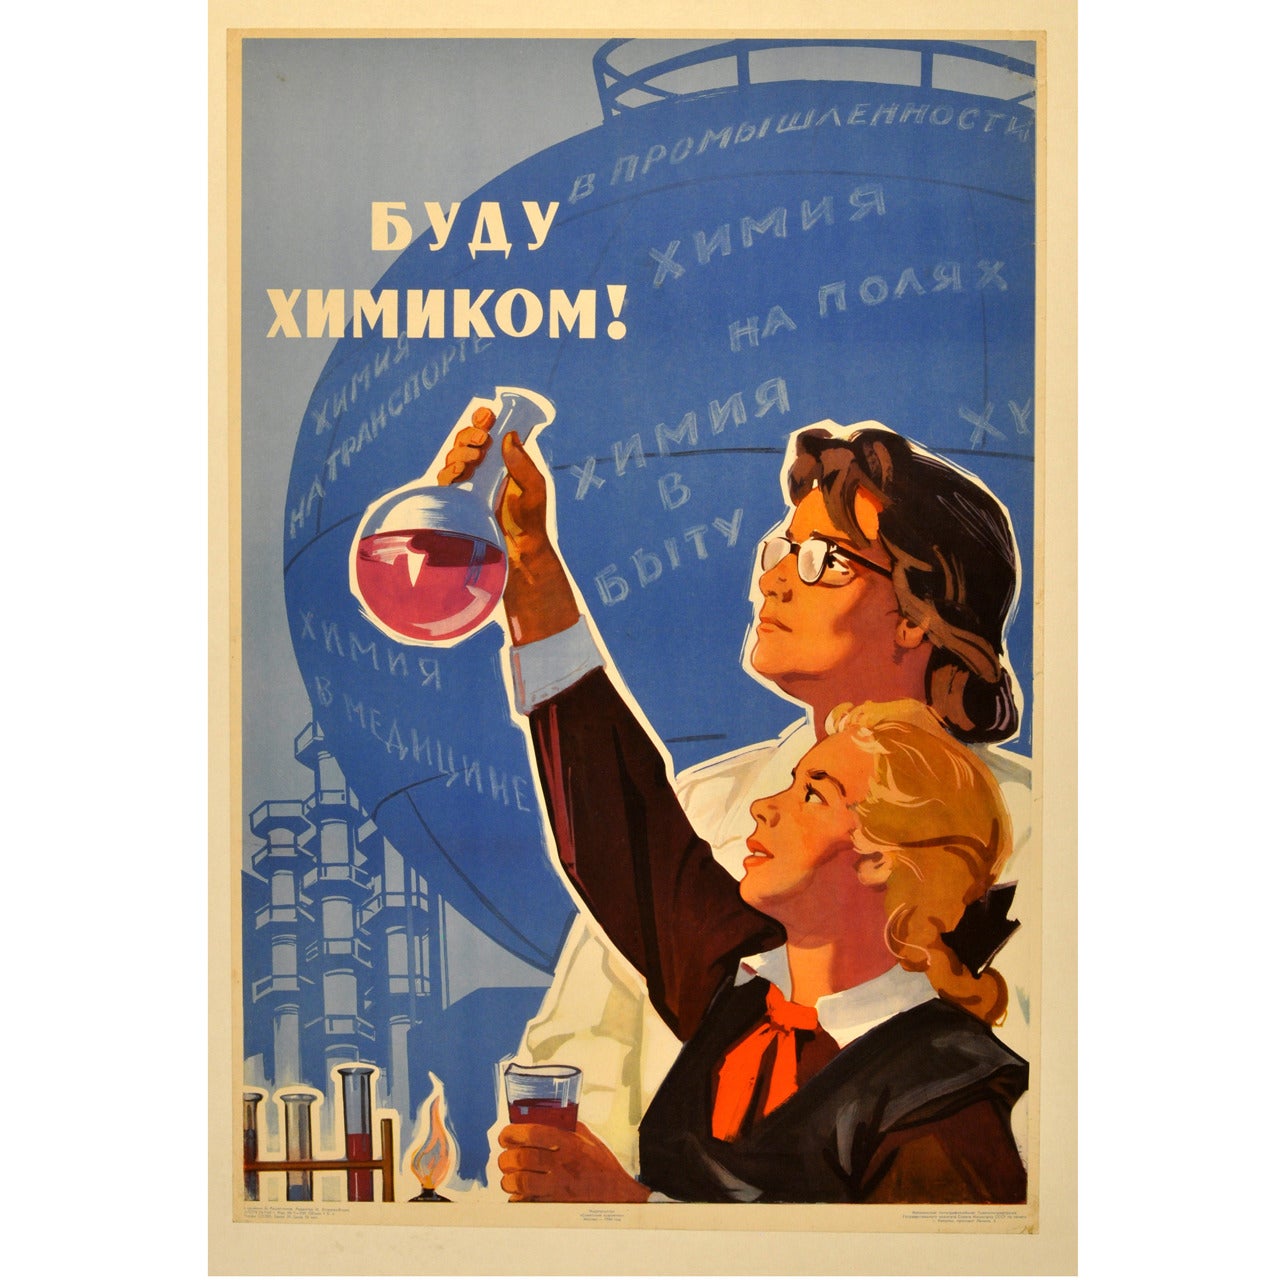 Original Propaganda Poster Issued in Soviet Russia, "I Will be a Chemist"